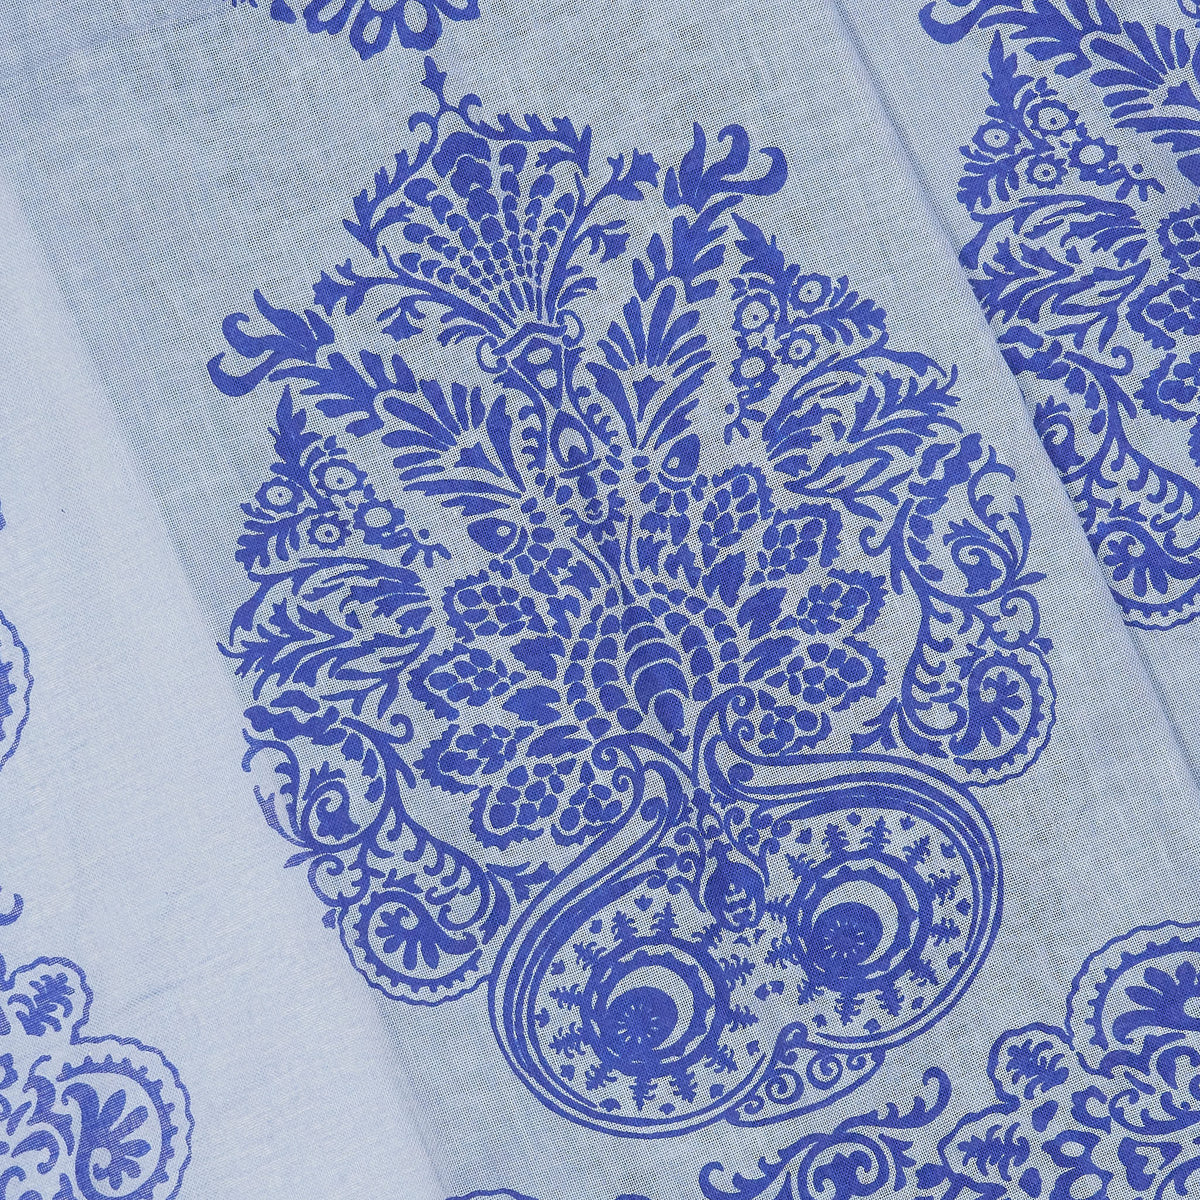 South2 West8  Floral Batik Printed Scarf